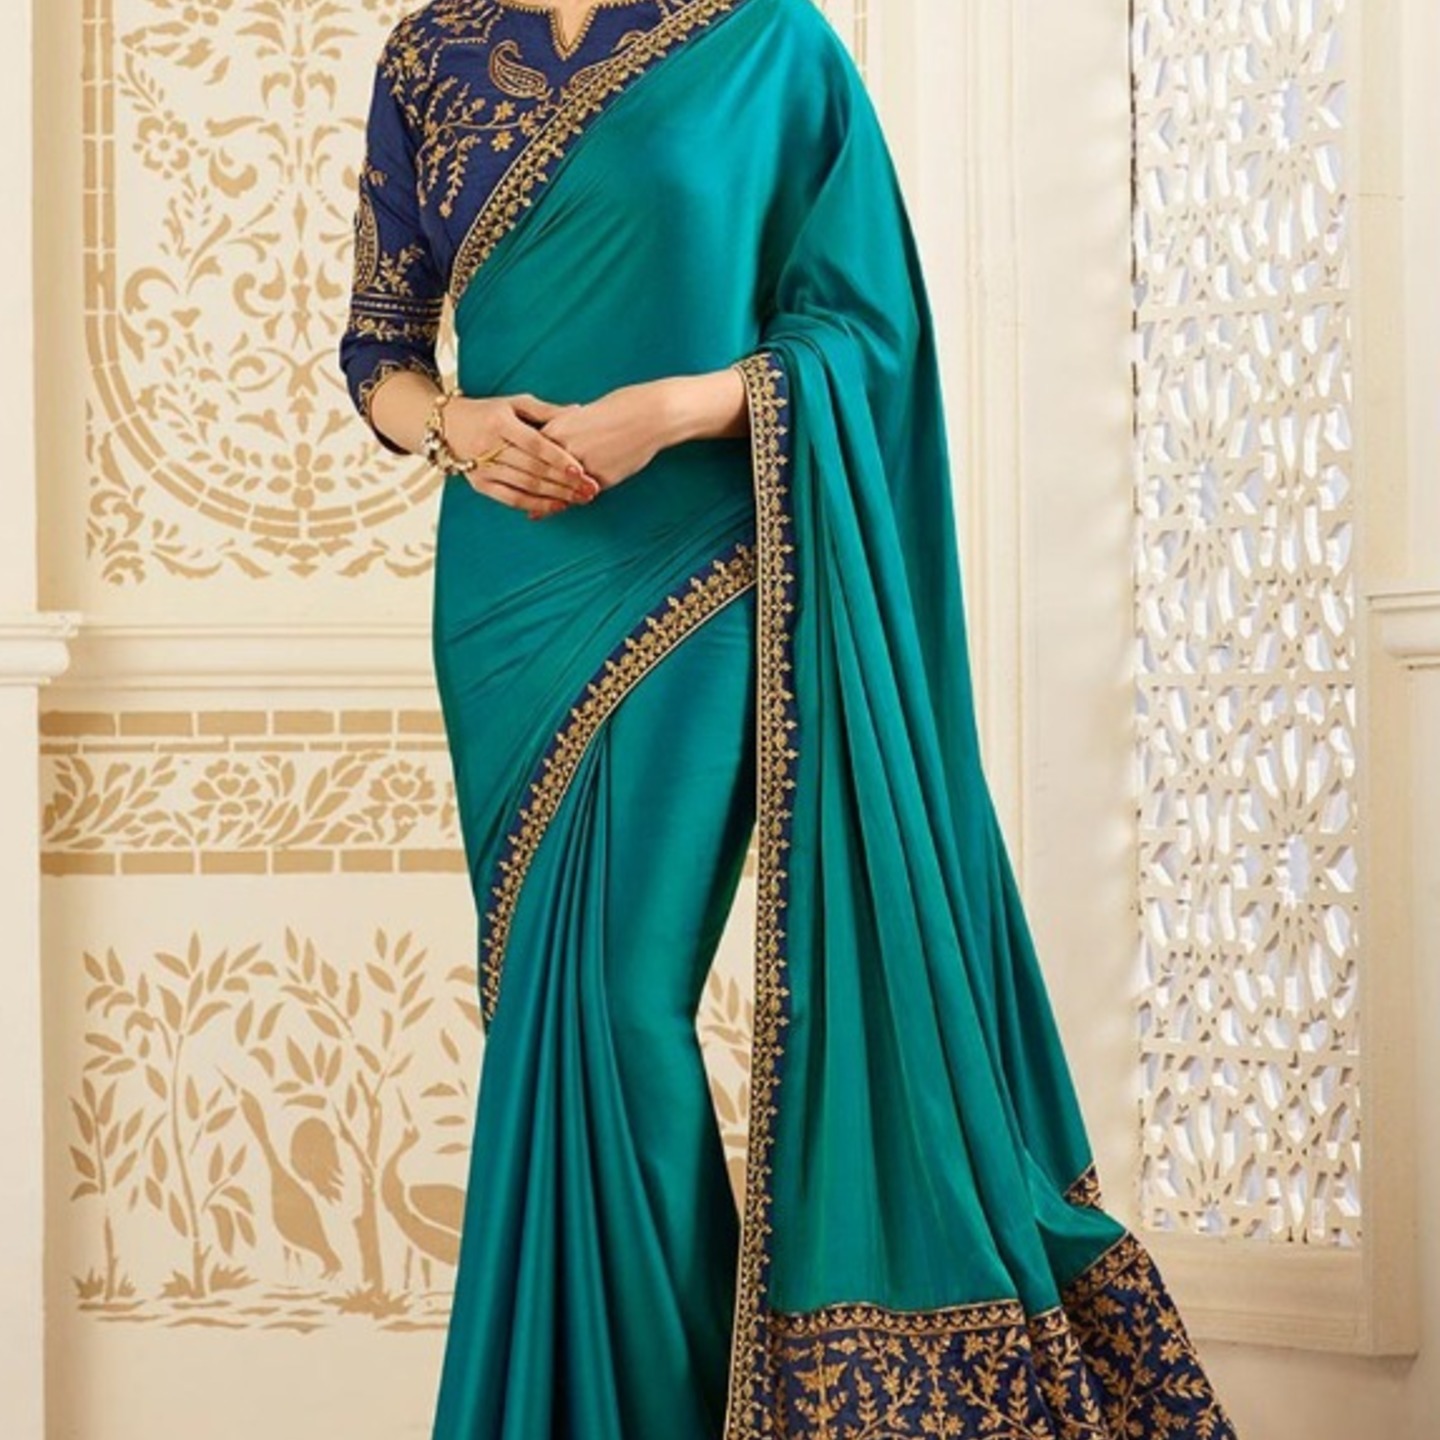 Robe Riche Blue Color Malai Silk Embroidery With Lace Saree 